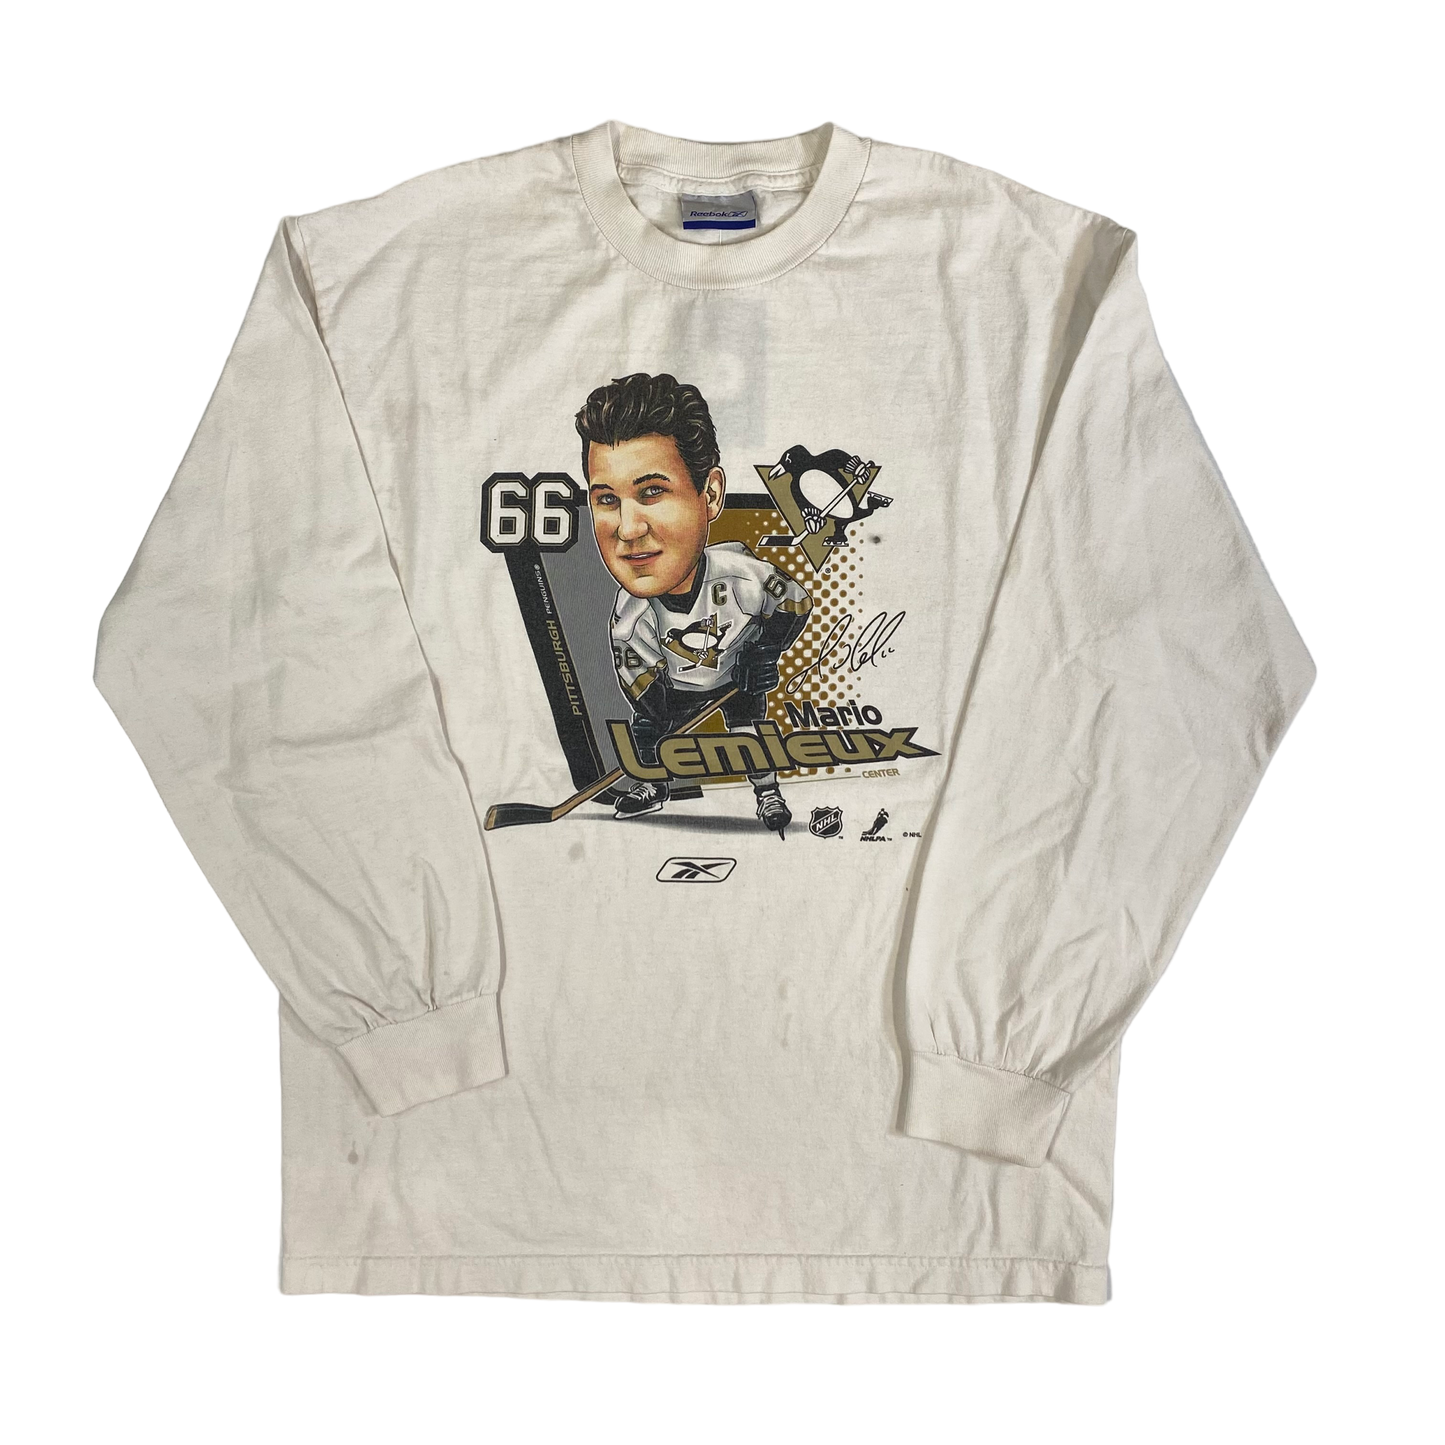 90’s Mario Lemieux Reebok LS T-shirt Sz L (A502)